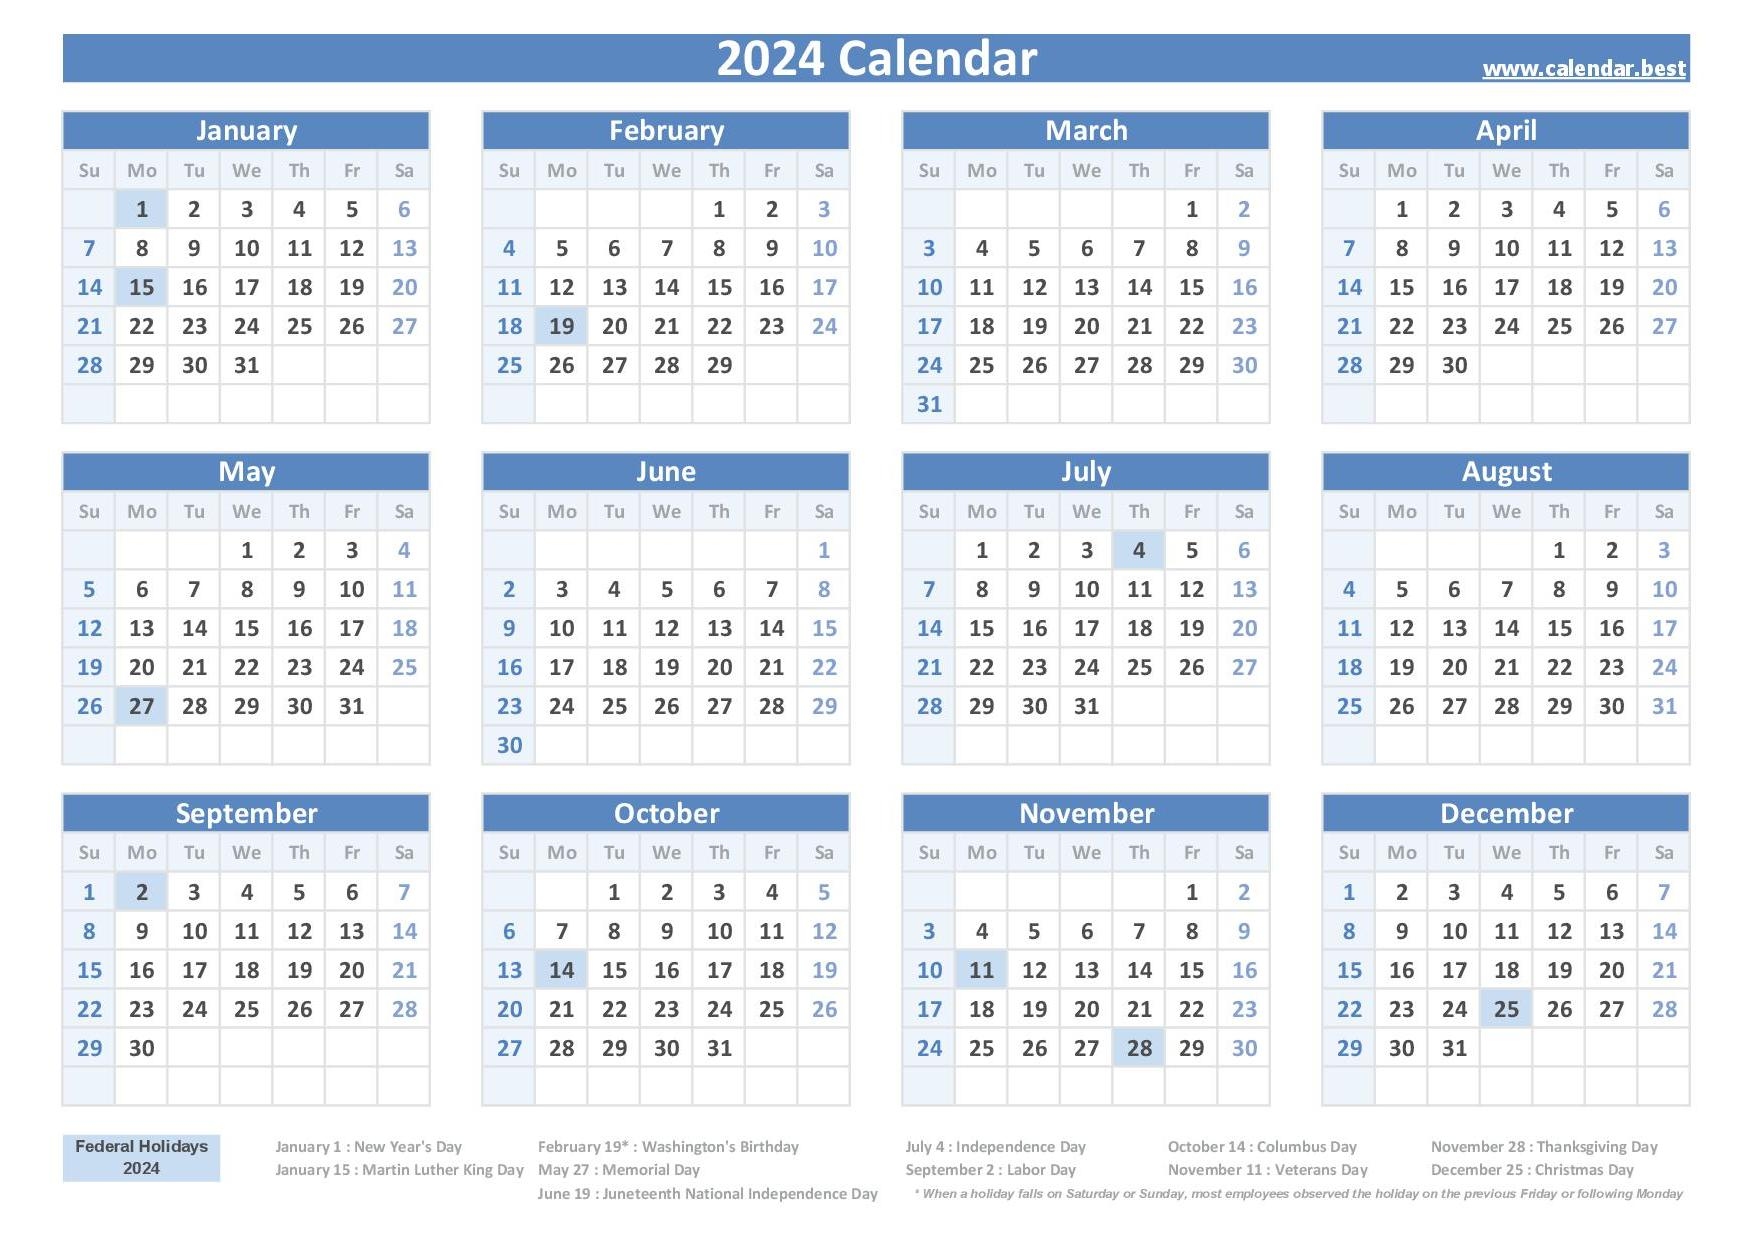 2024 Federal Holidays List And 2024 Calendar With Holidays To Print - Free Printable 2024 Calendar With Federal Holidays Usa